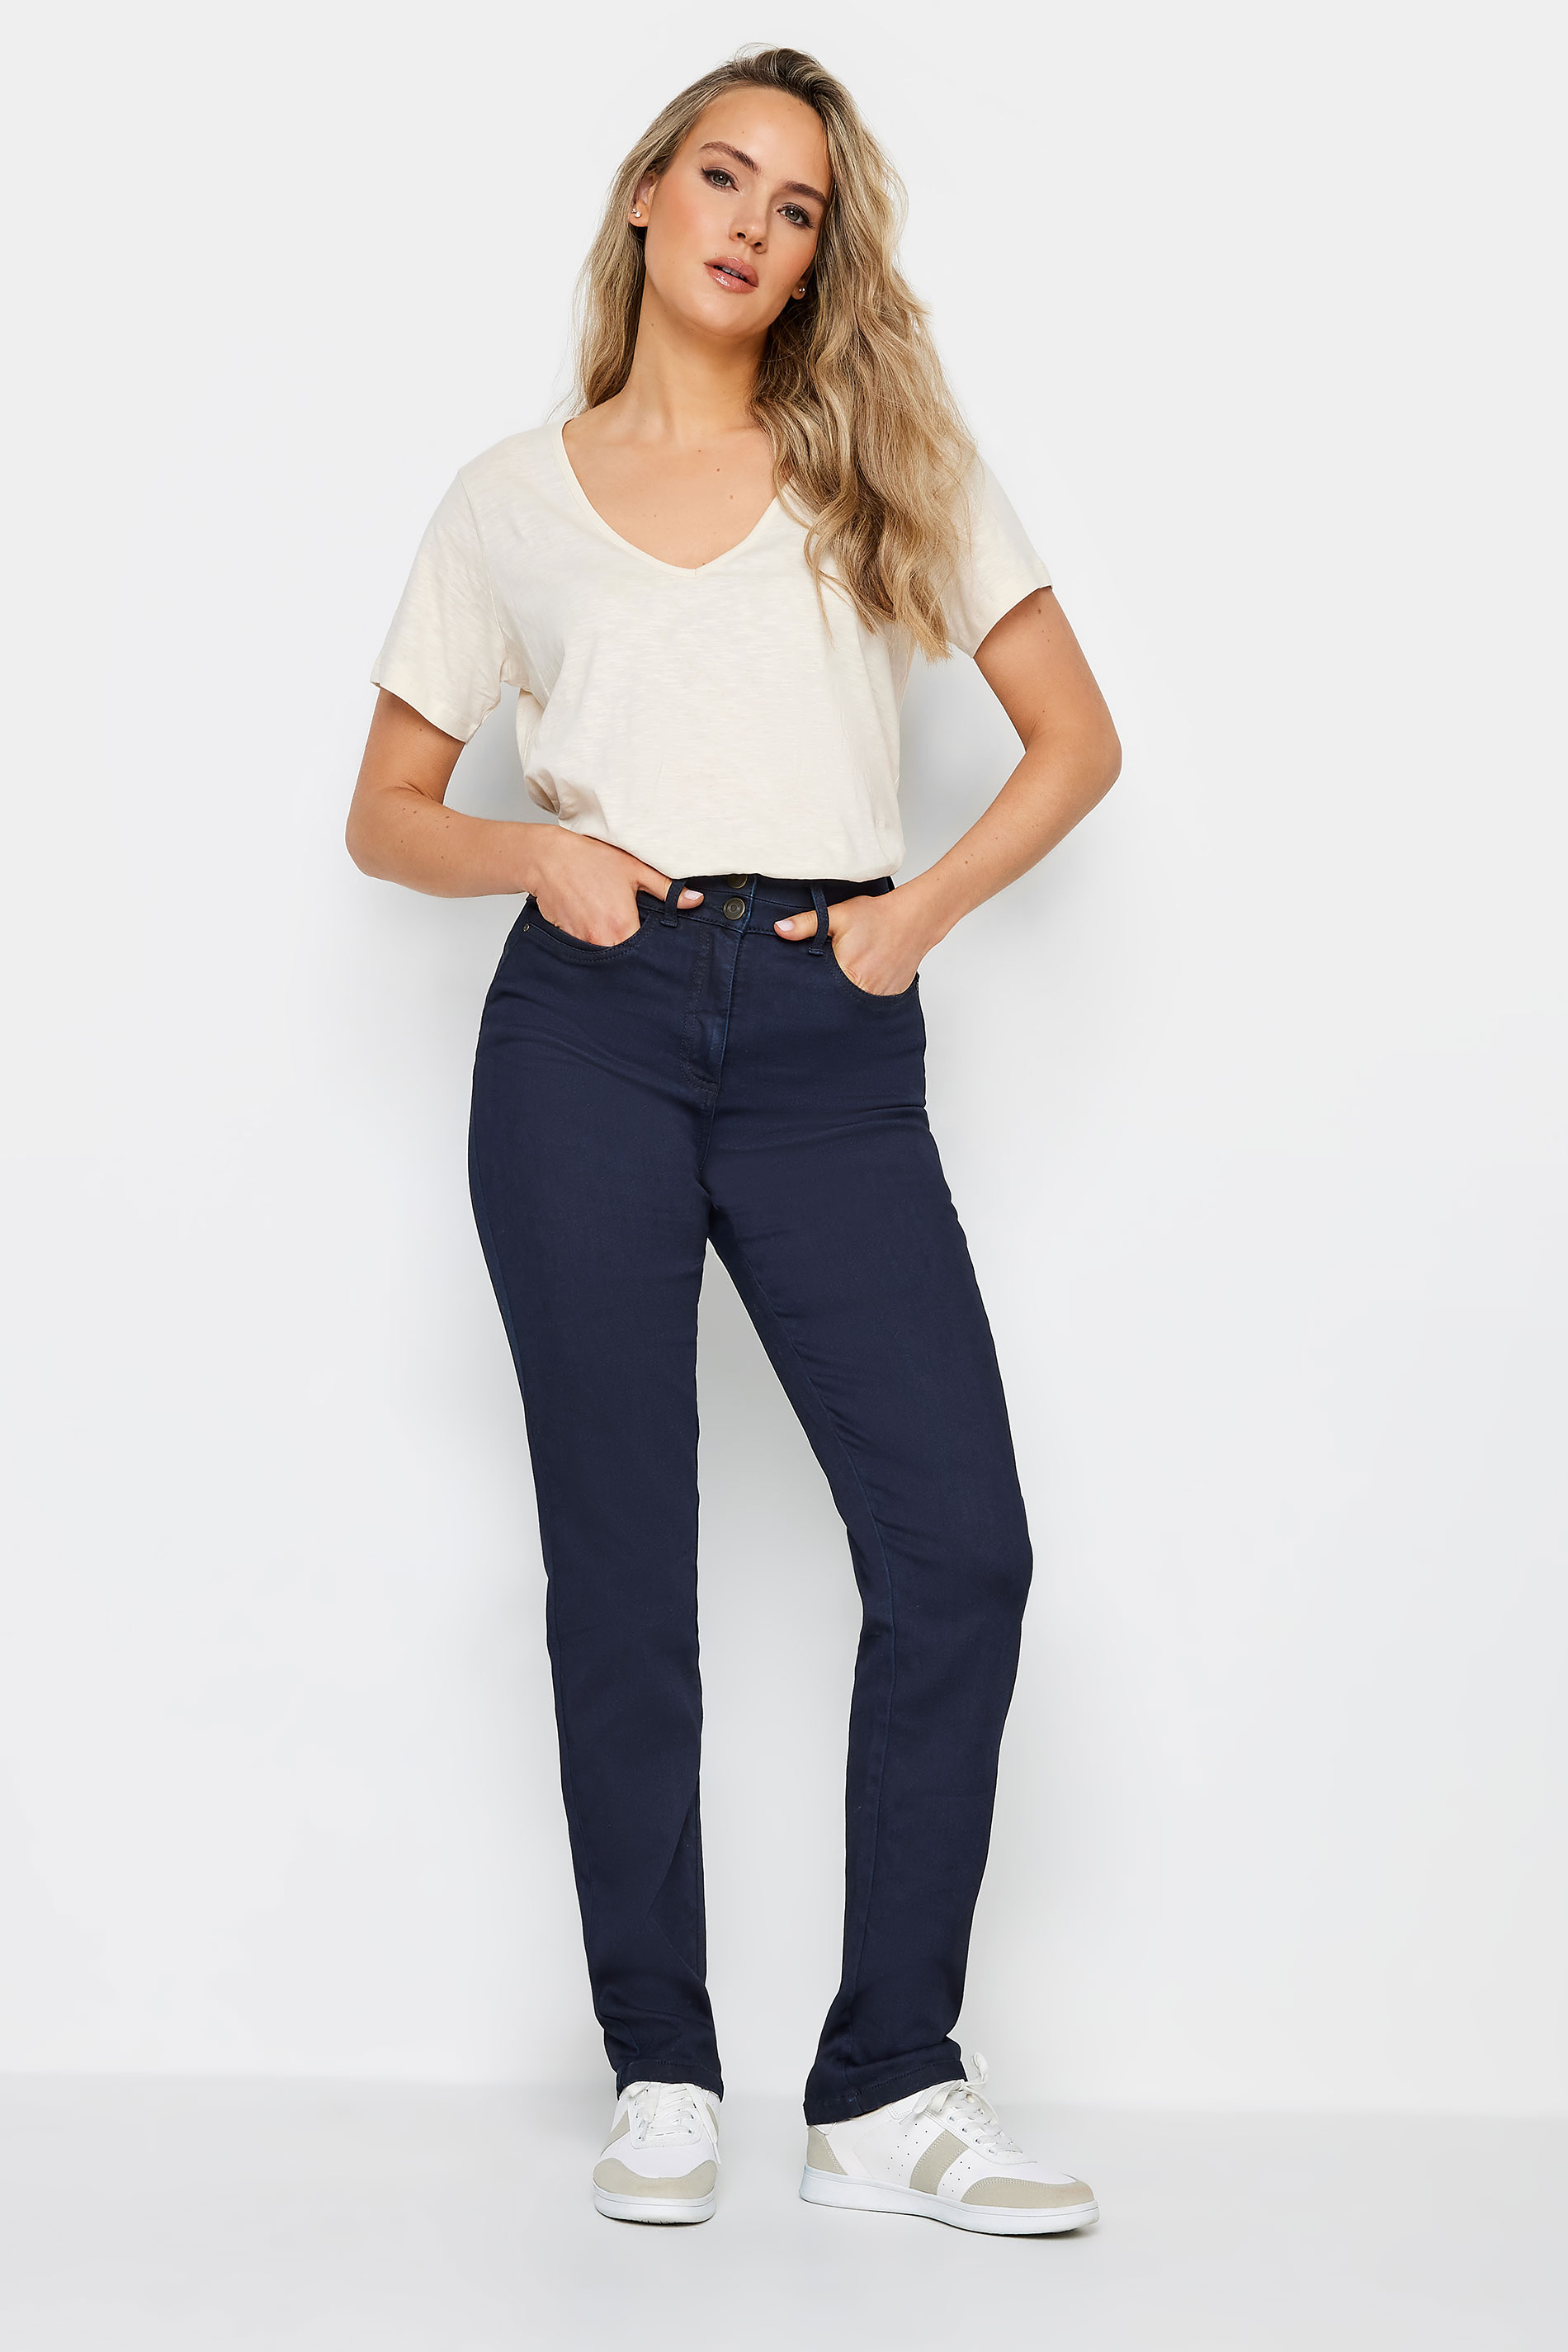 LTS PREMIUM Tall Women's Indigo Blue Lift & Shape Slim Leg Jeans | Long Tall Sally 2